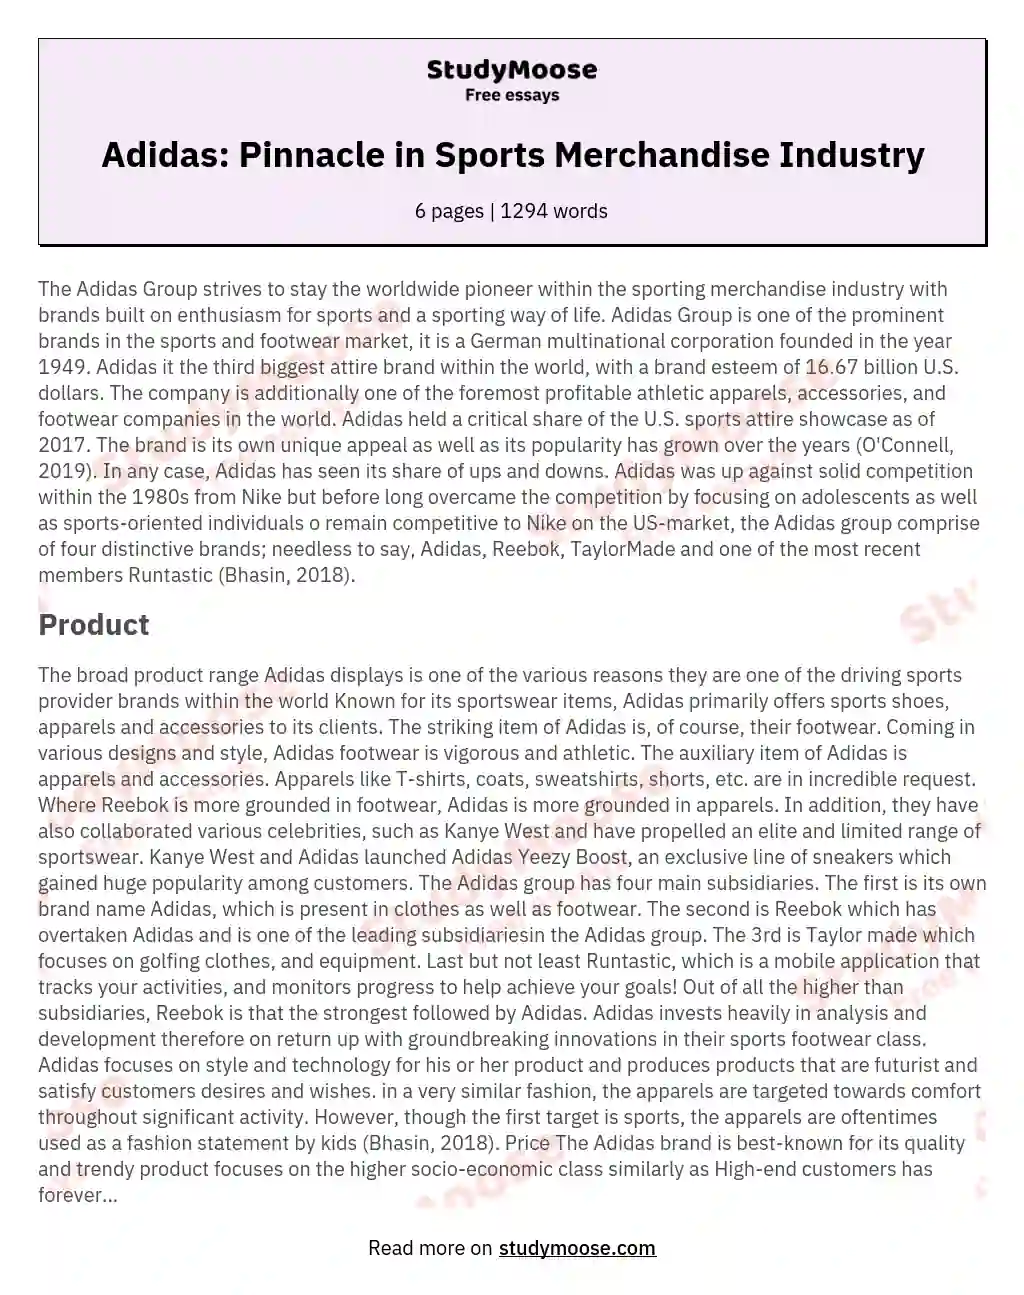 Adidas: Pinnacle in Sports Merchandise Industry essay